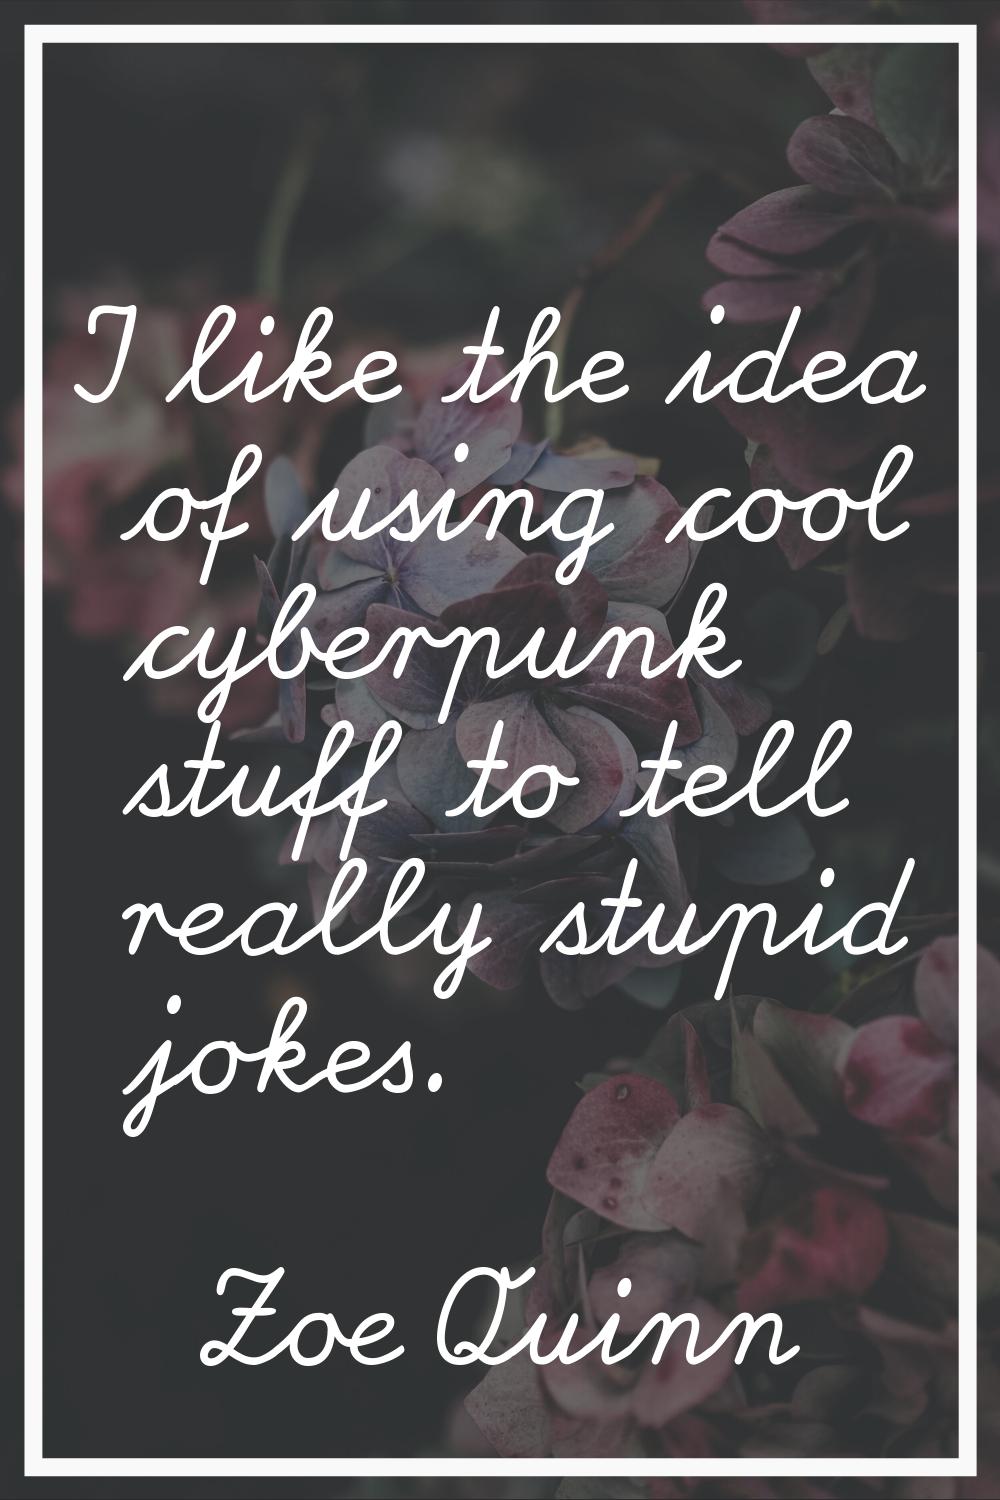 I like the idea of using cool cyberpunk stuff to tell really stupid jokes.